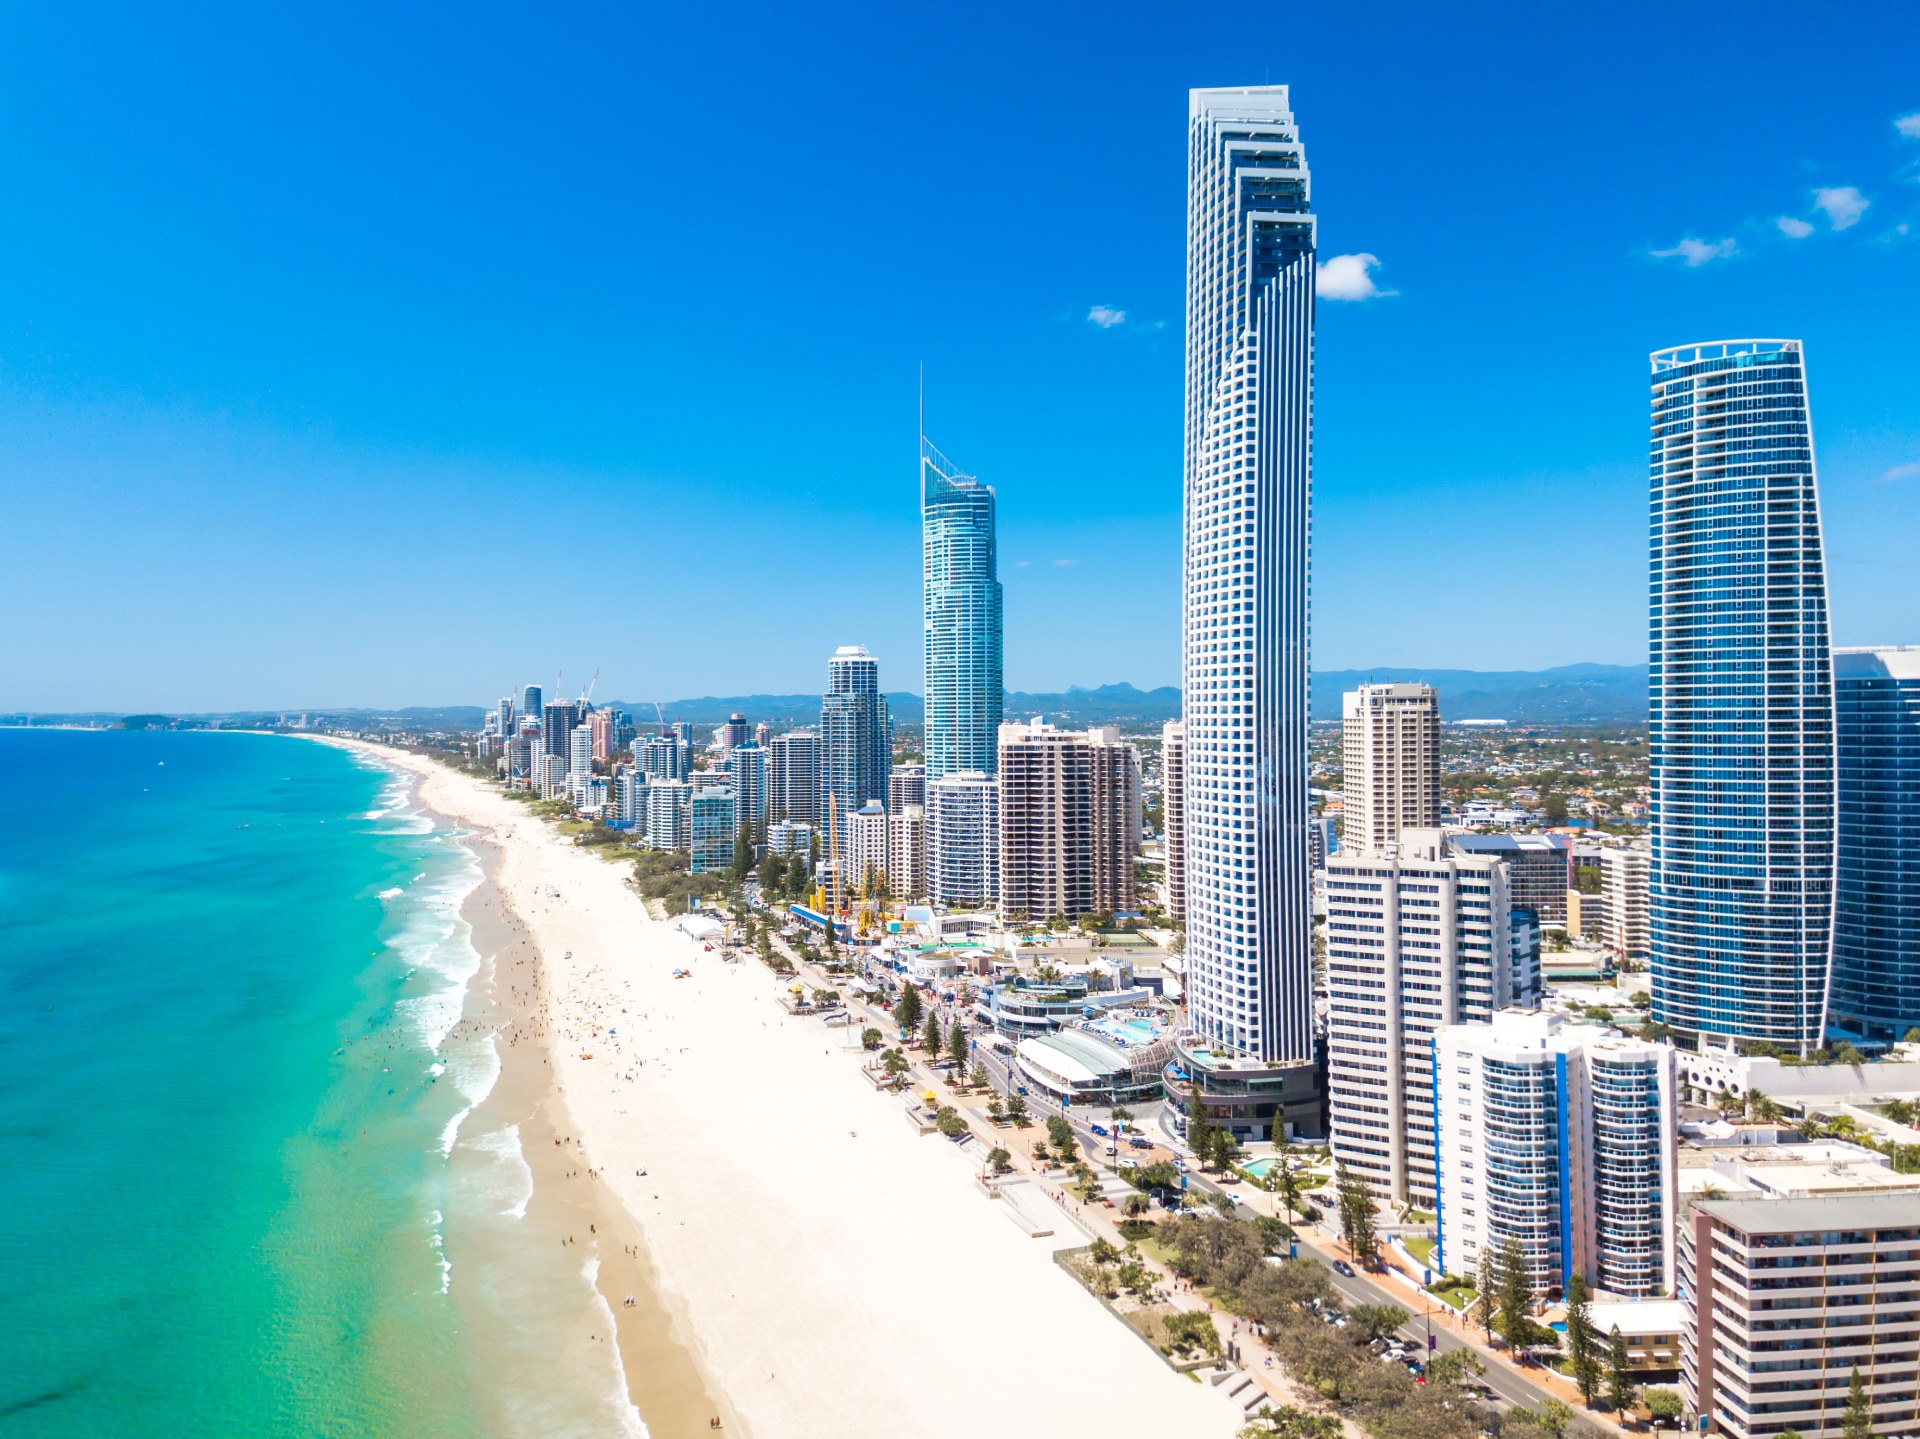 Q1 Gold Coast, the tallest tower in Australia - We Build Value